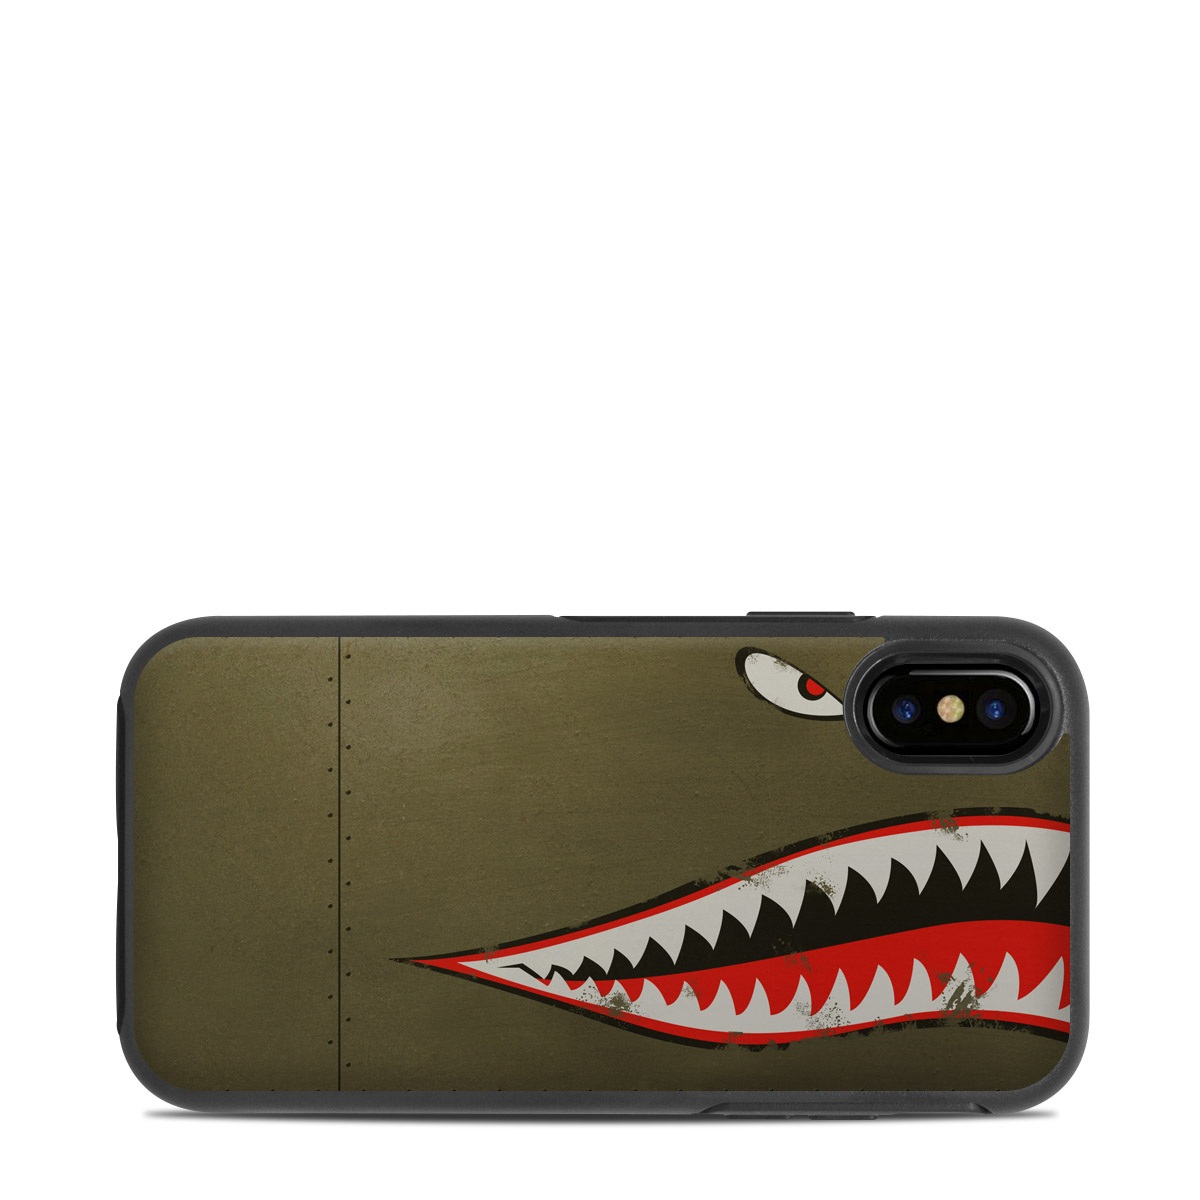 OtterBox Symmetry iPhone X Case Skin - USAF Shark (Image 1)